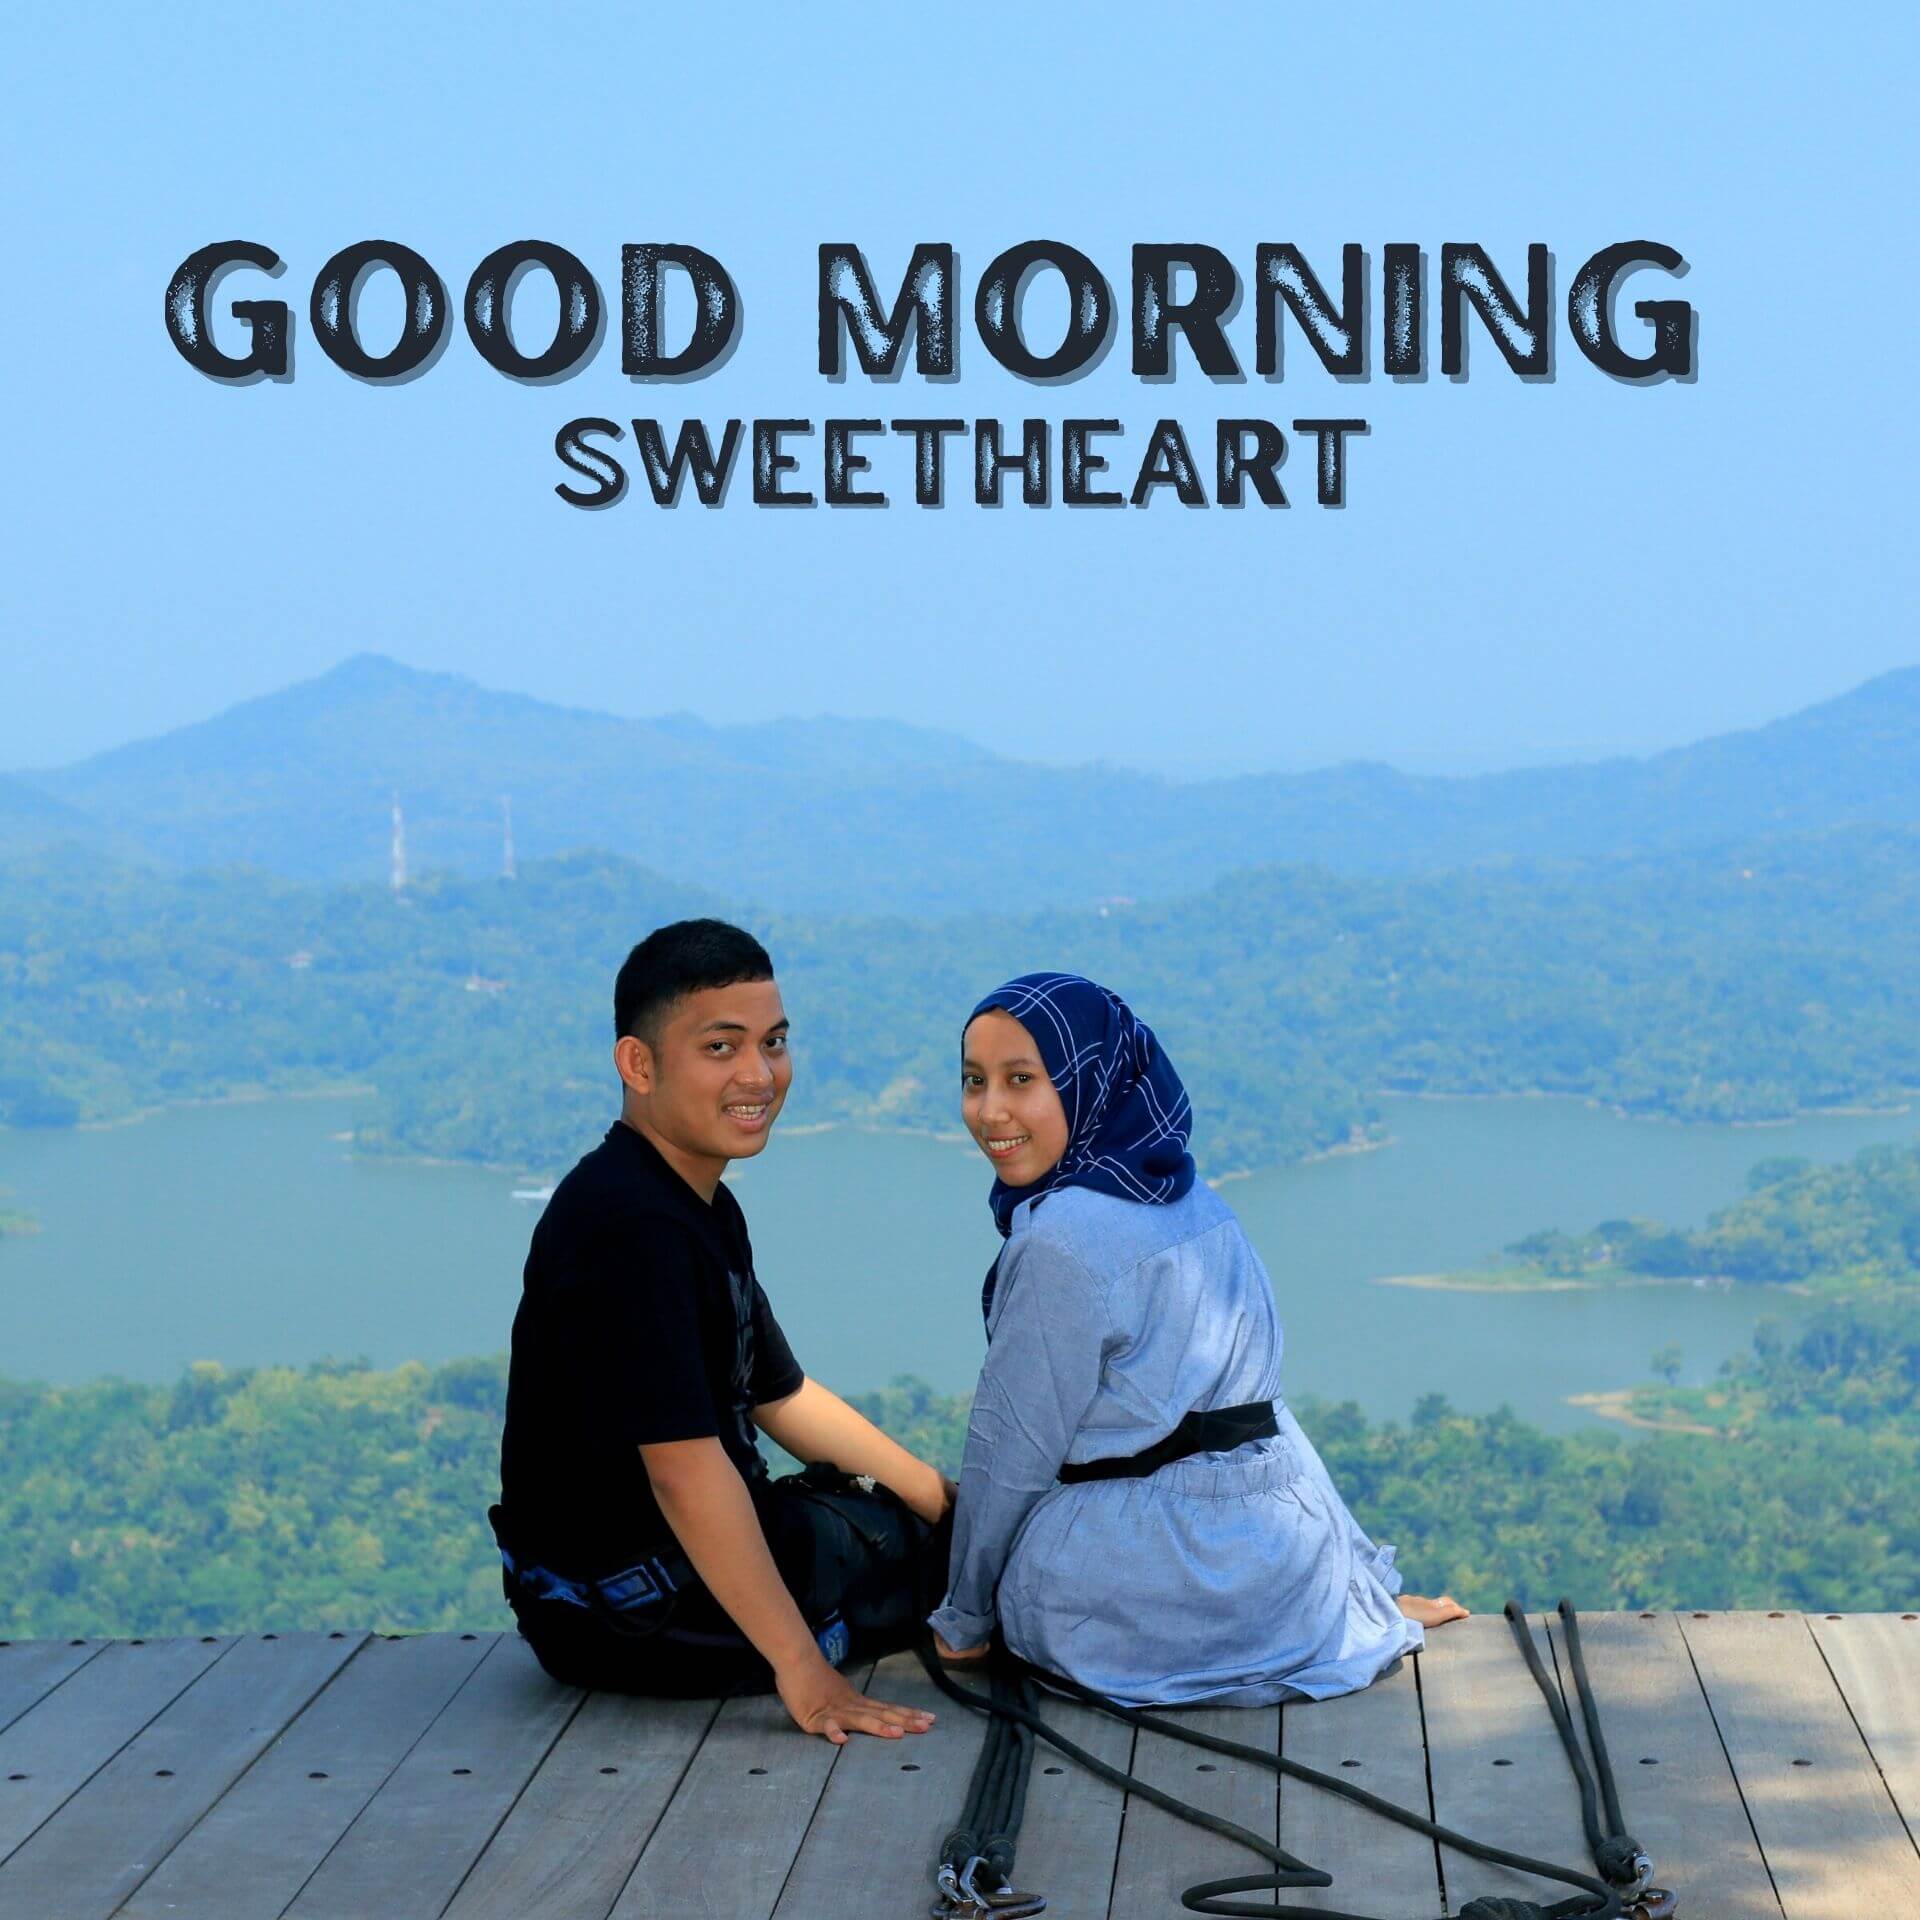 Romantic Good Morning Wallpaper Download 5